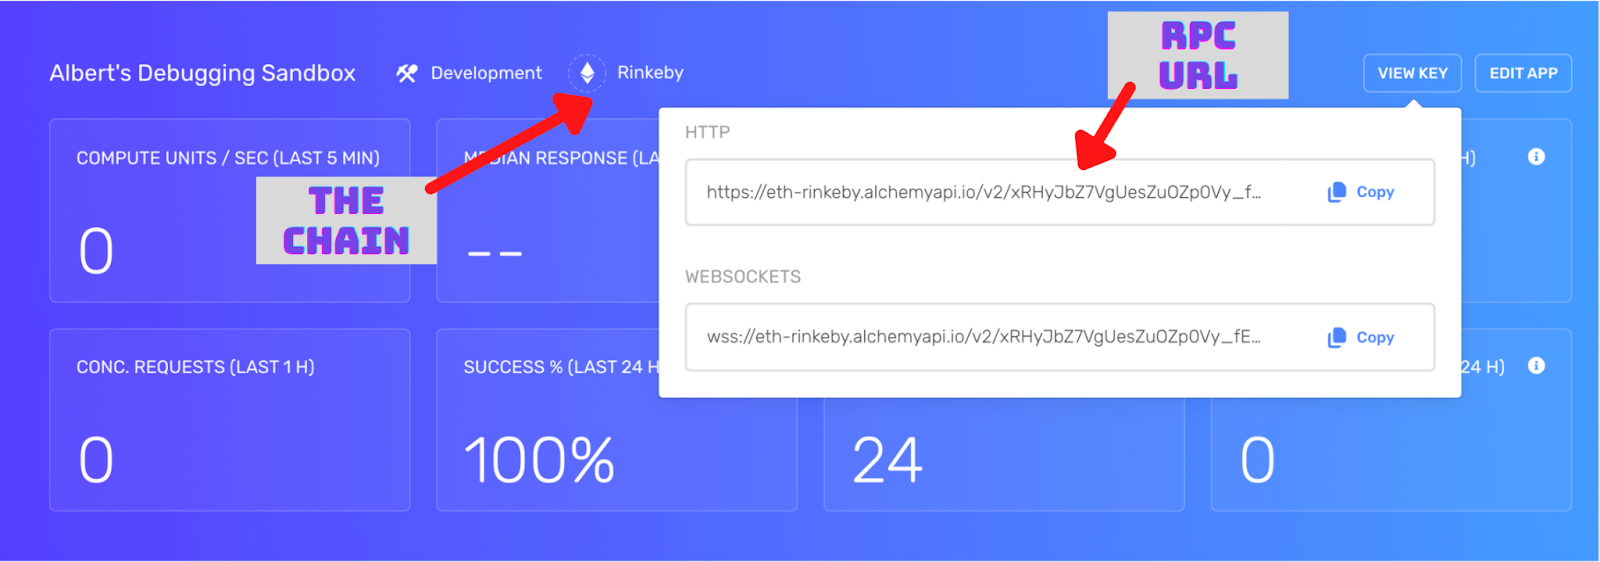 Screenshot of alchemy project dashboard highlighting the HTTP API key URL.